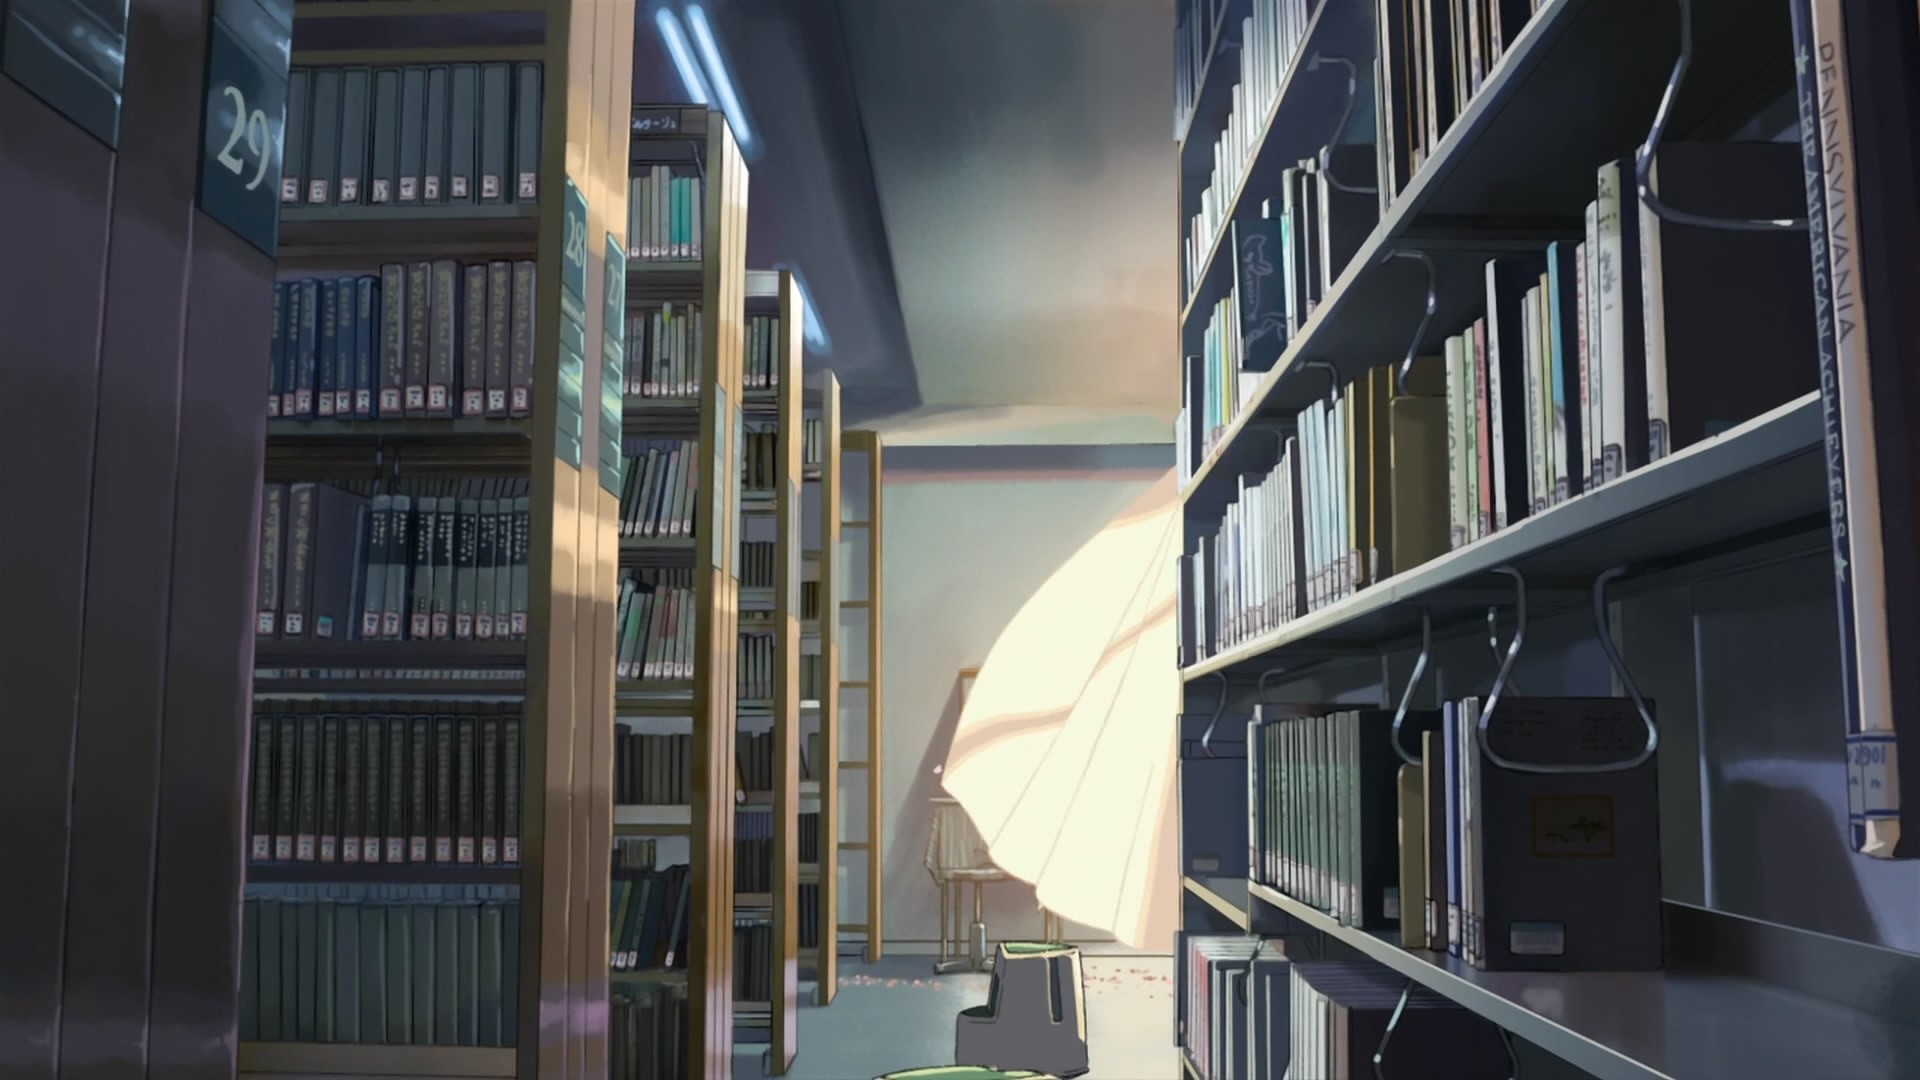 Anime 1920x1080 5 Centimeters Per Second anime books indoors